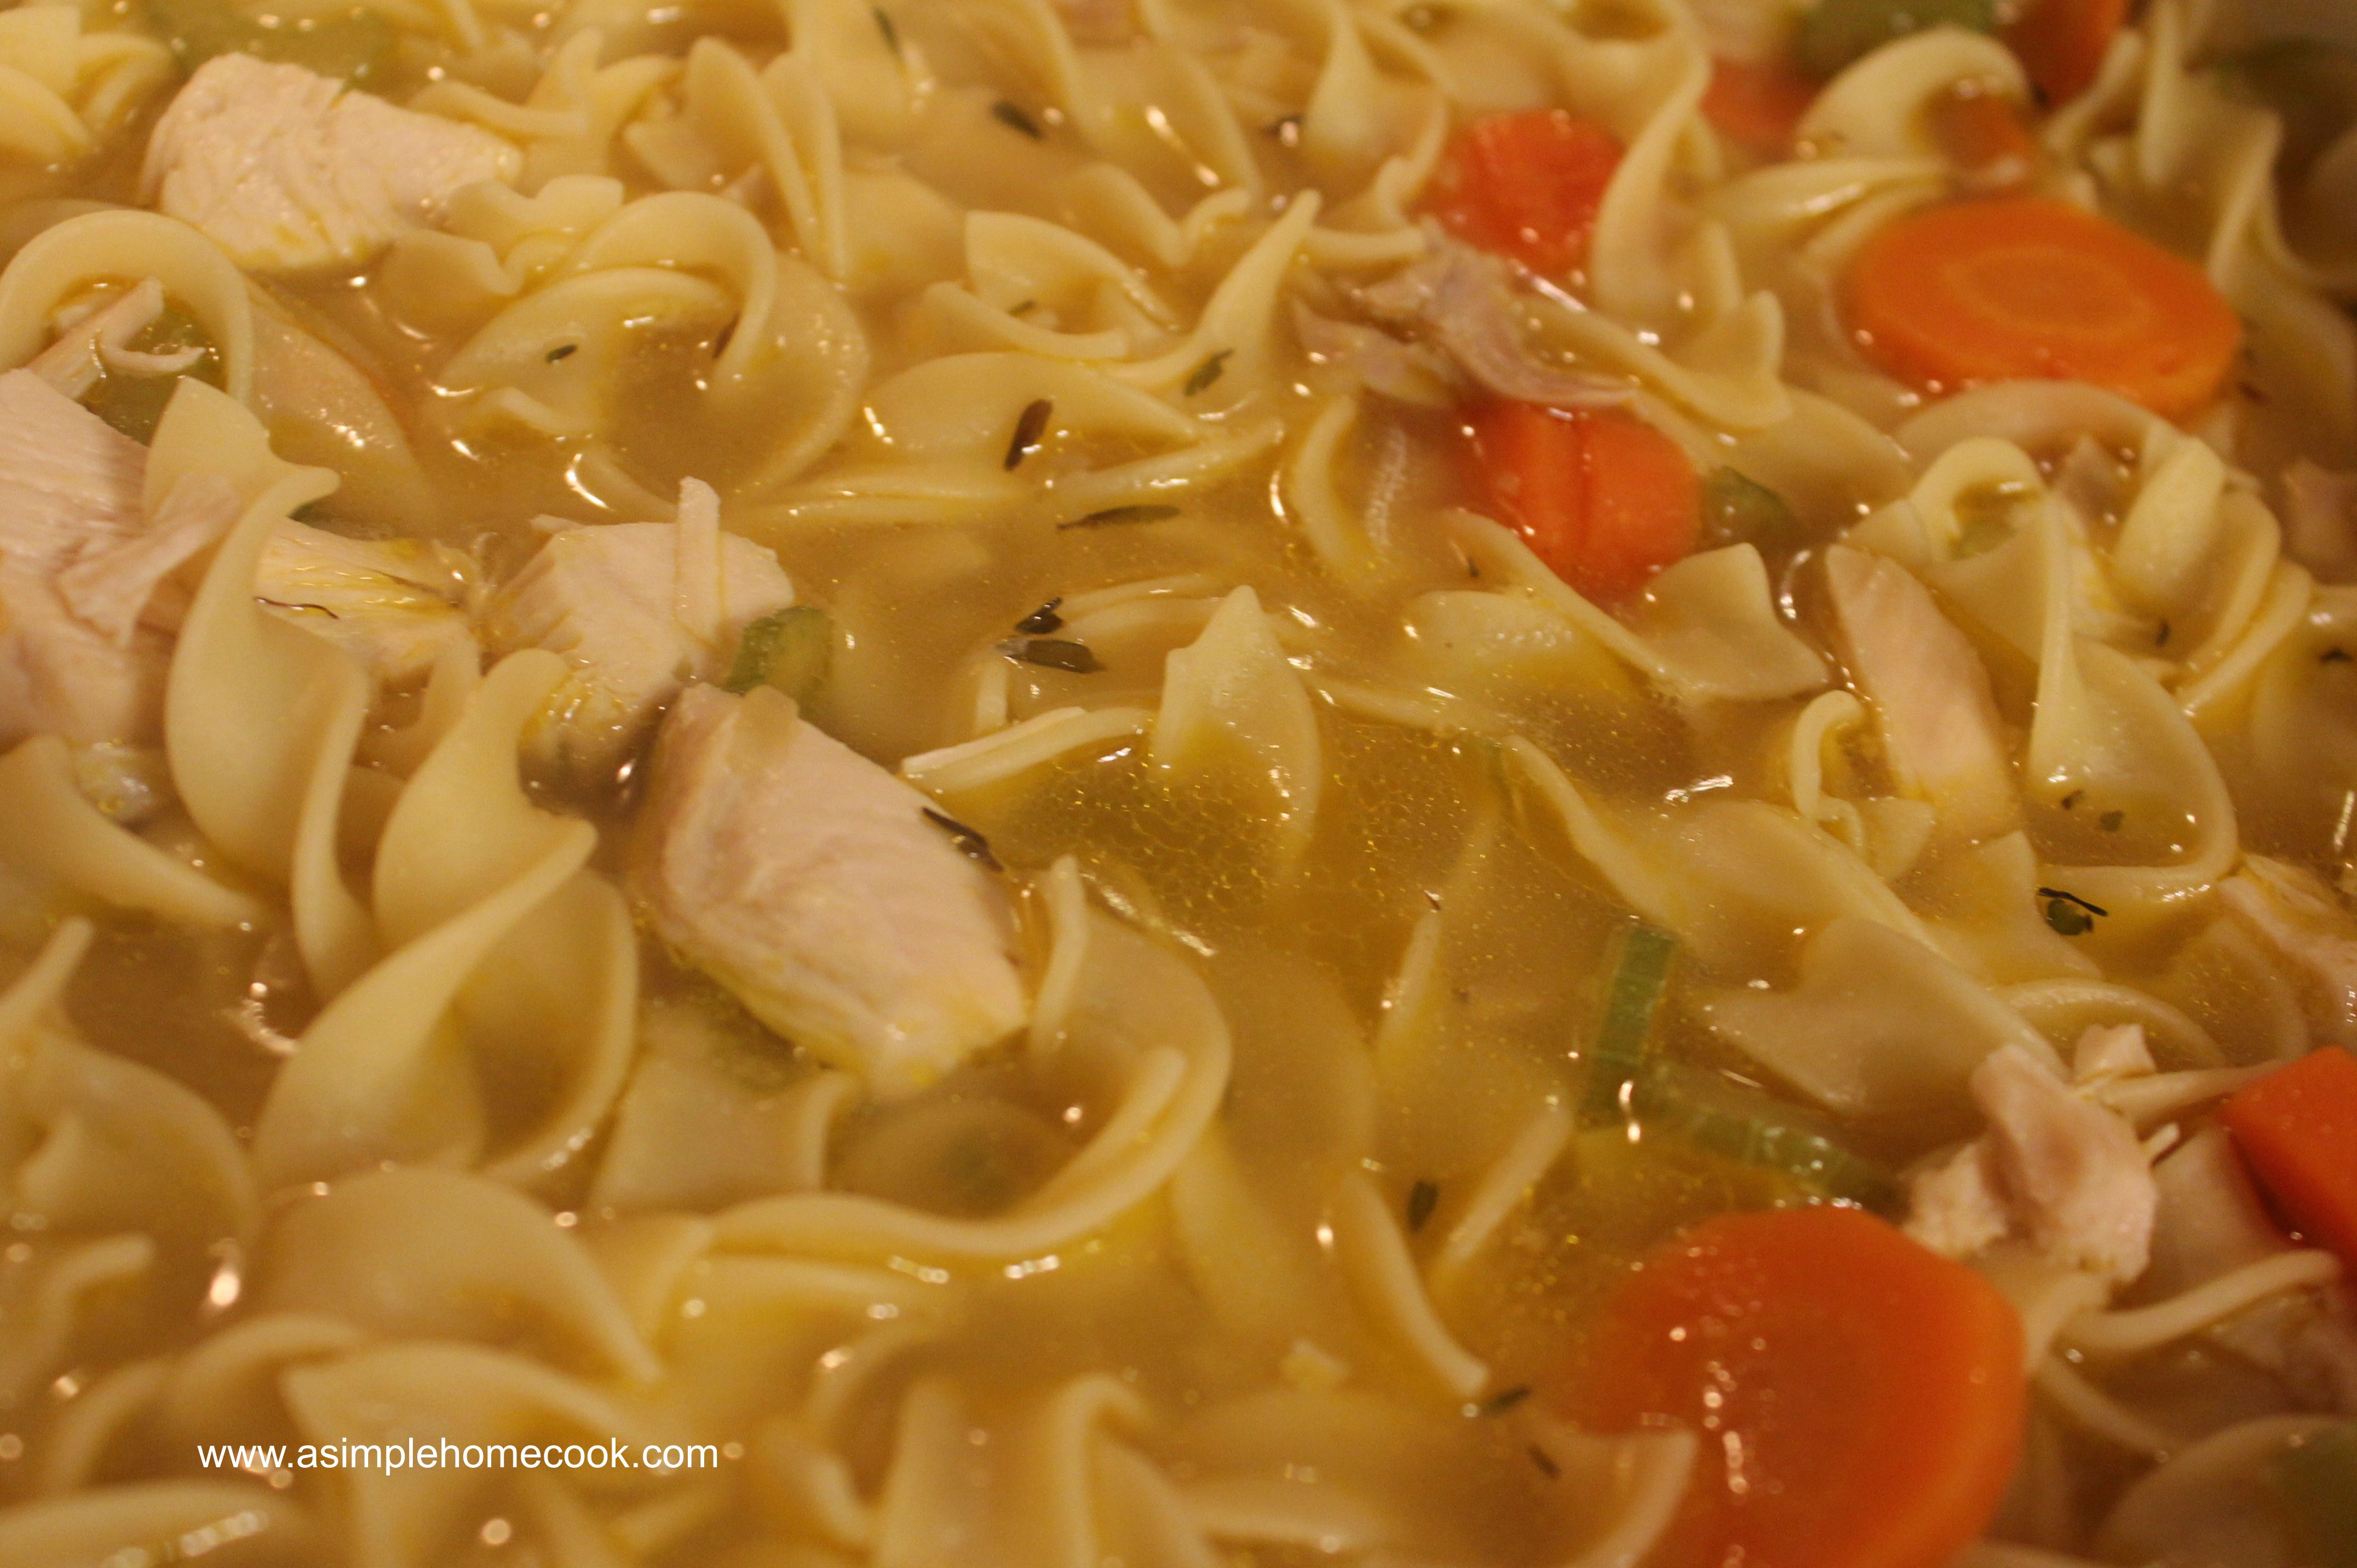 https://www.asimplehomecook.com/wp-content/uploads/2014/02/Chicken-Noodle-Soup.jpg